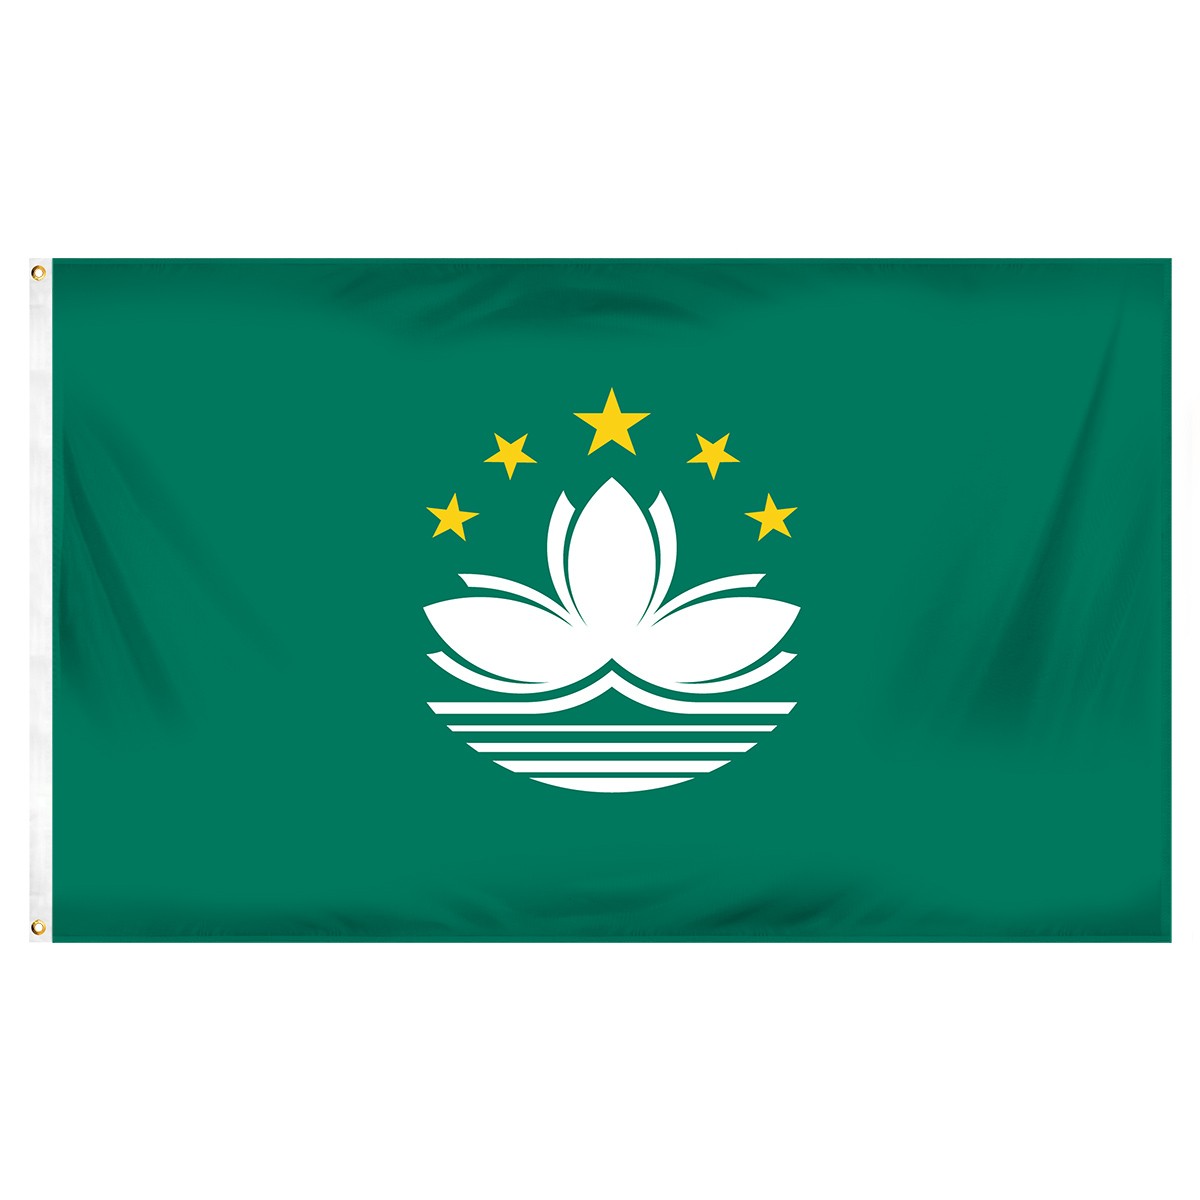 Macau Executive Flags